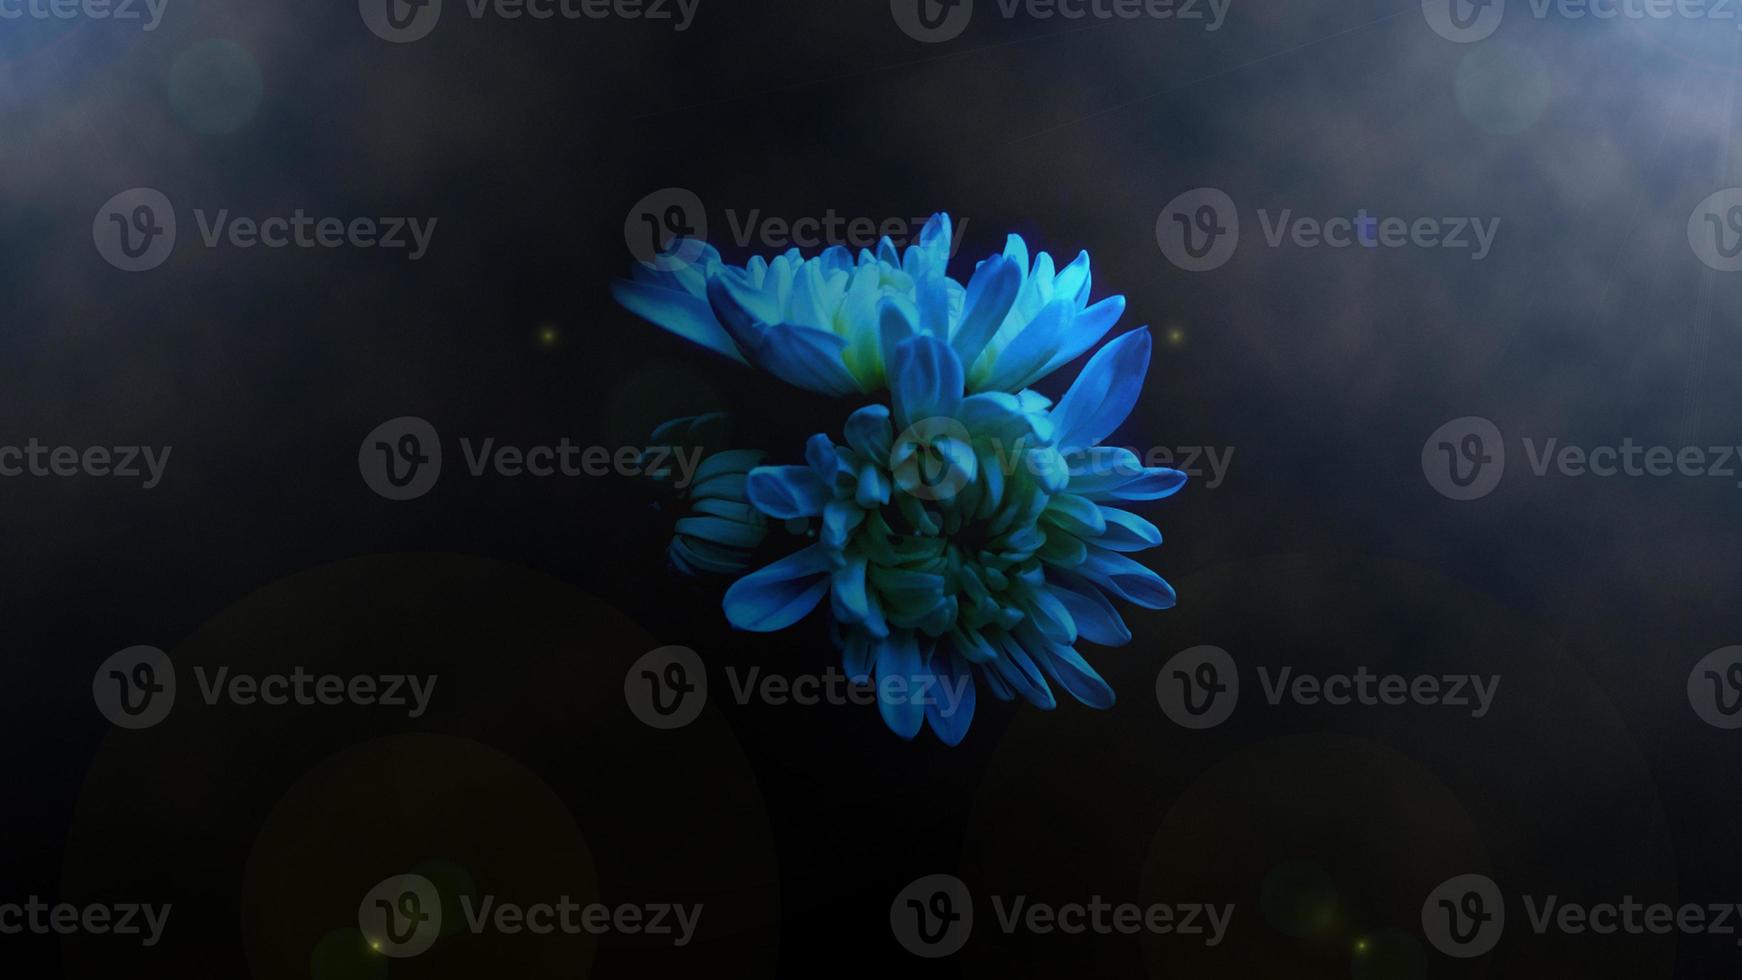 re-edited flower background photo